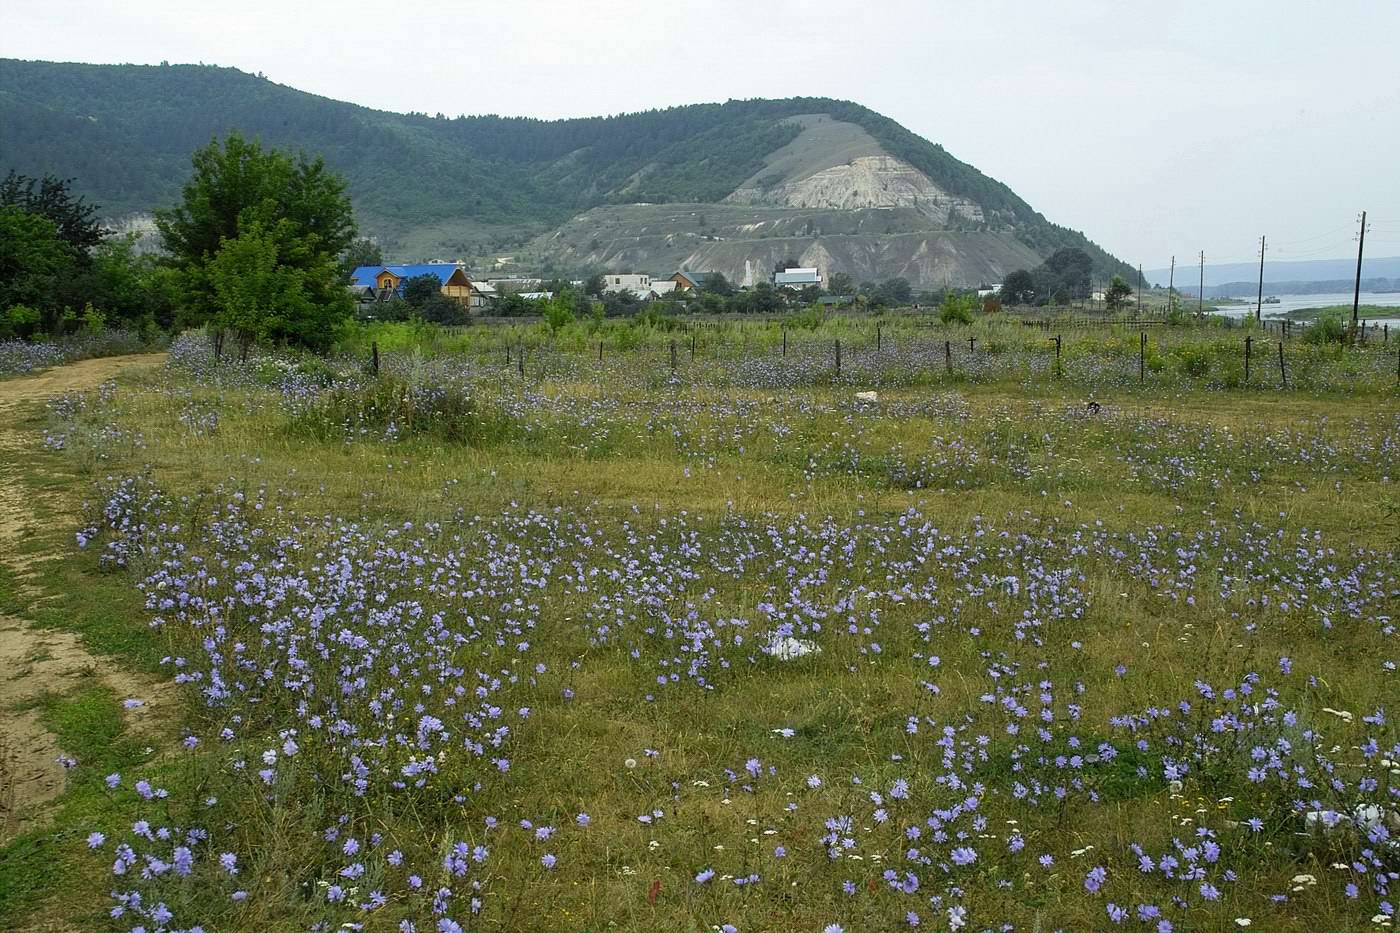 Ширяево, image of landscape/habitat.